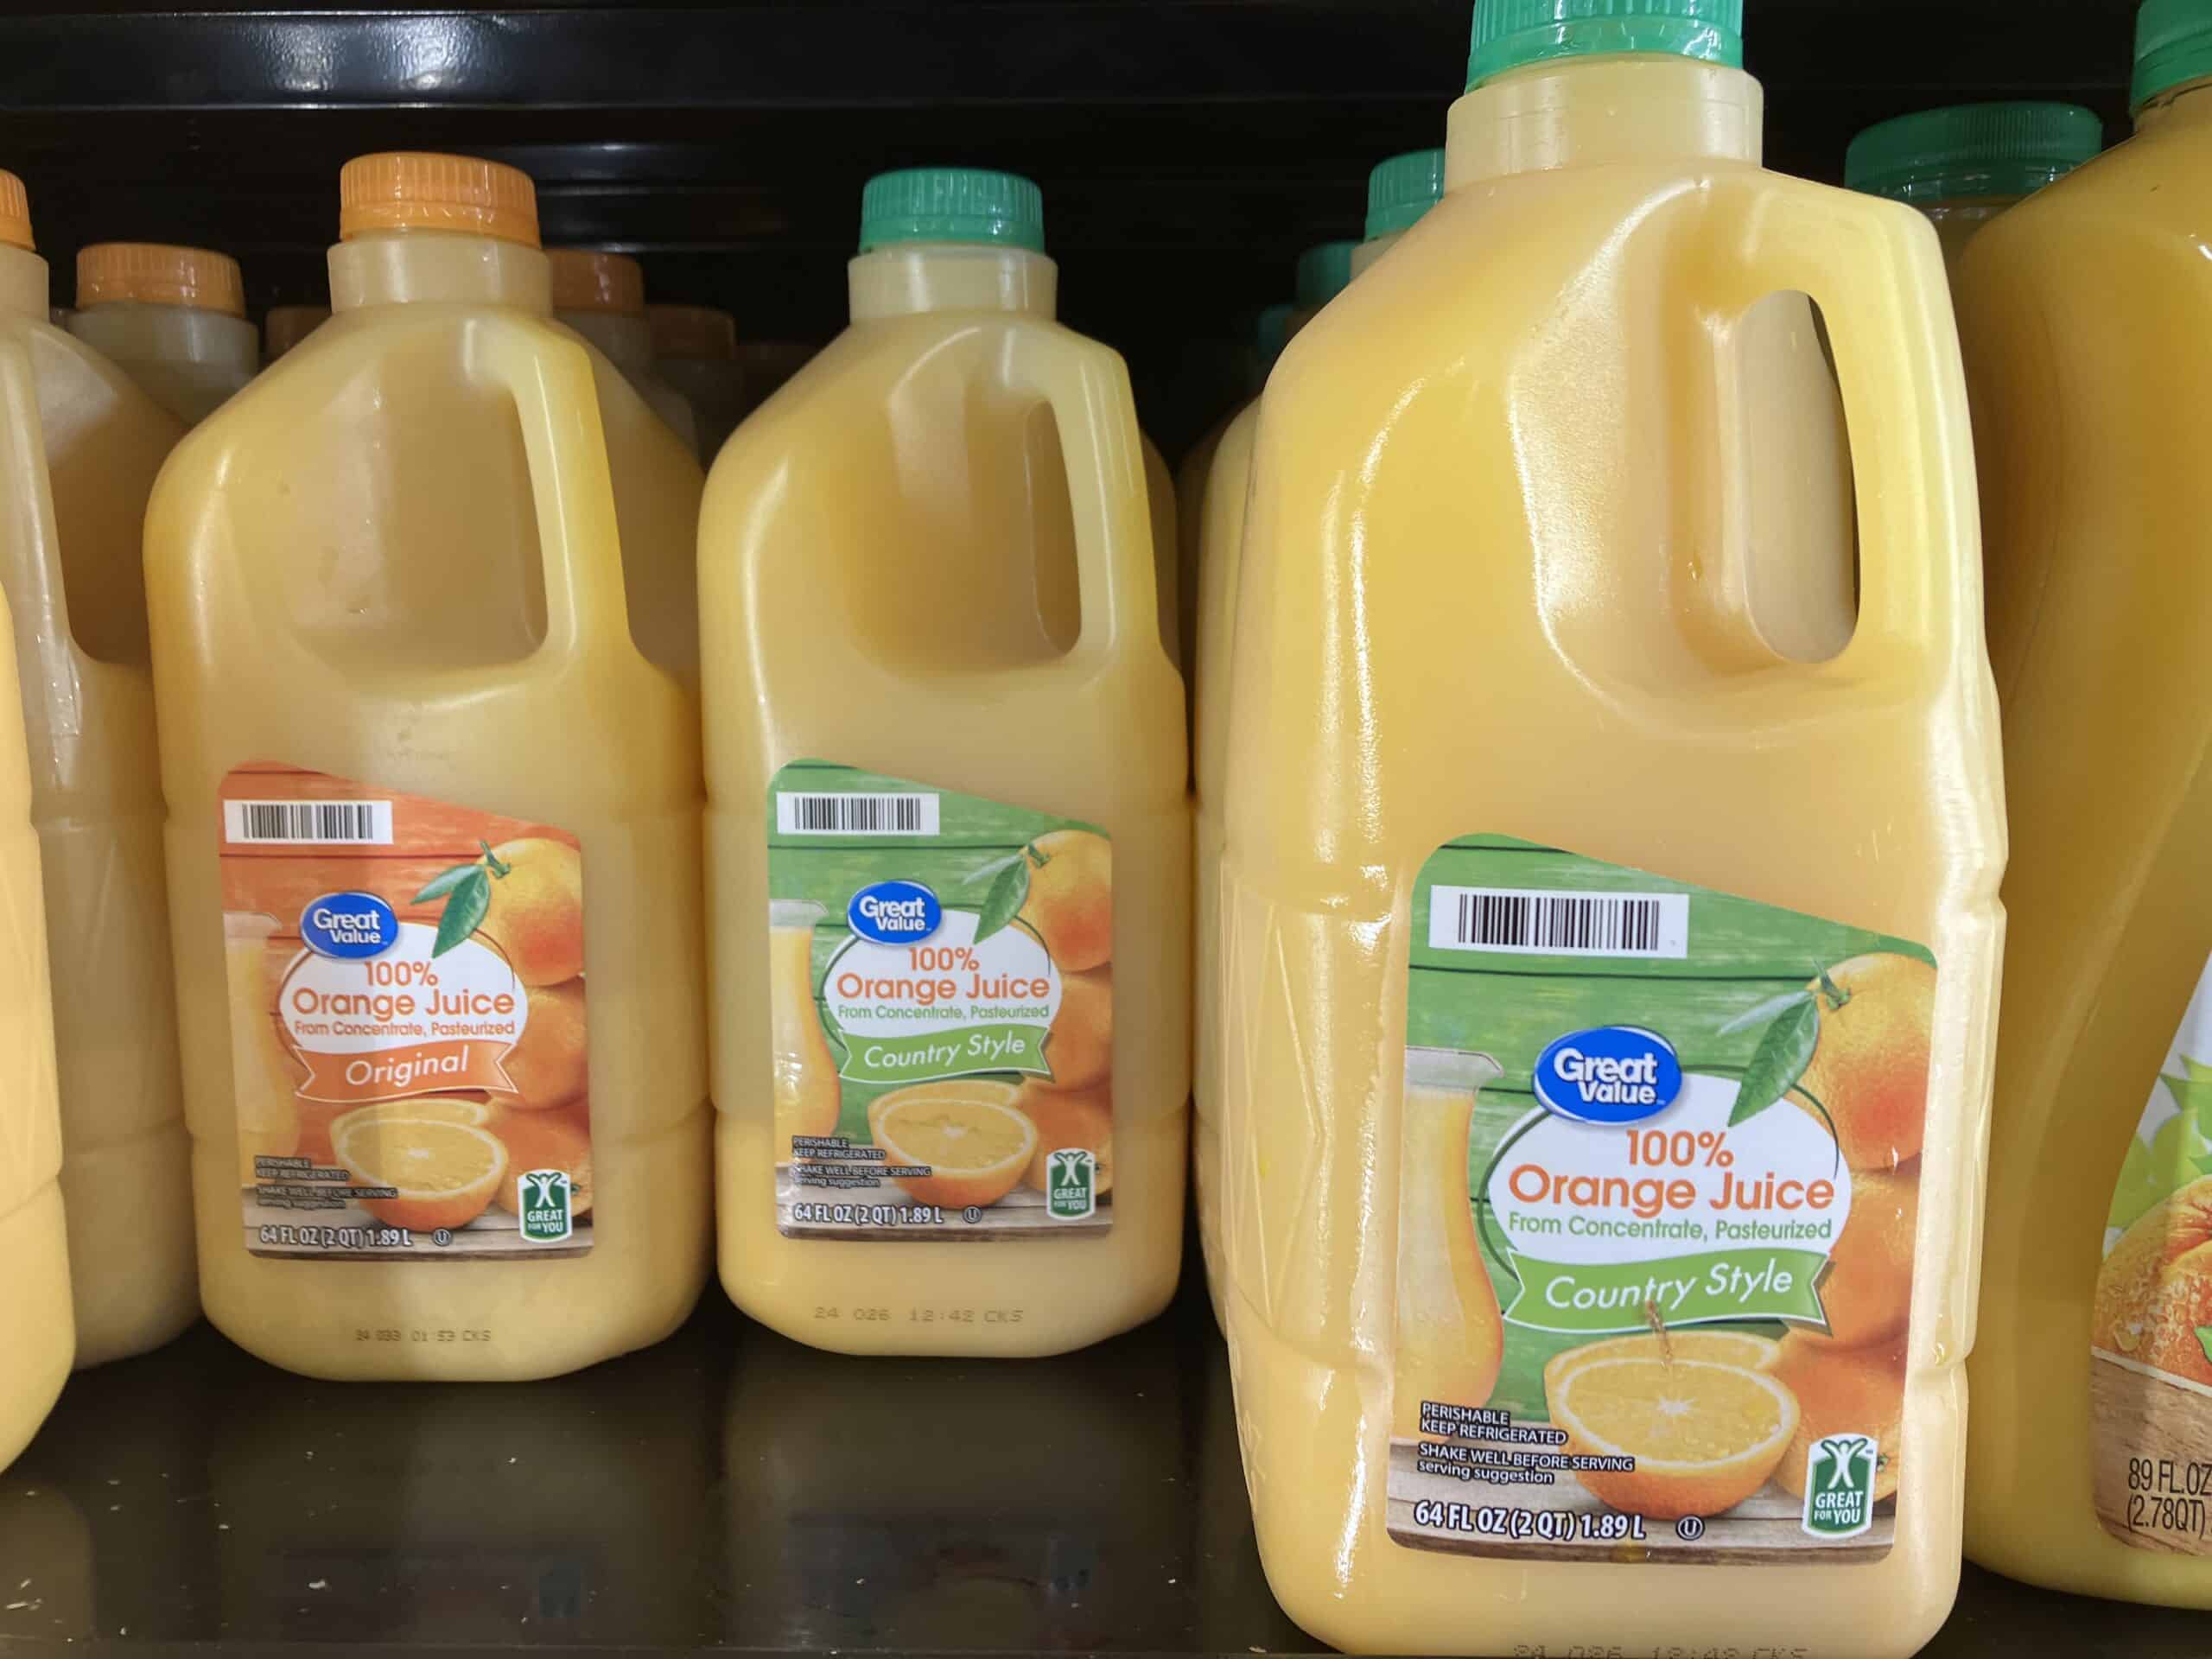 Great Value orange juice